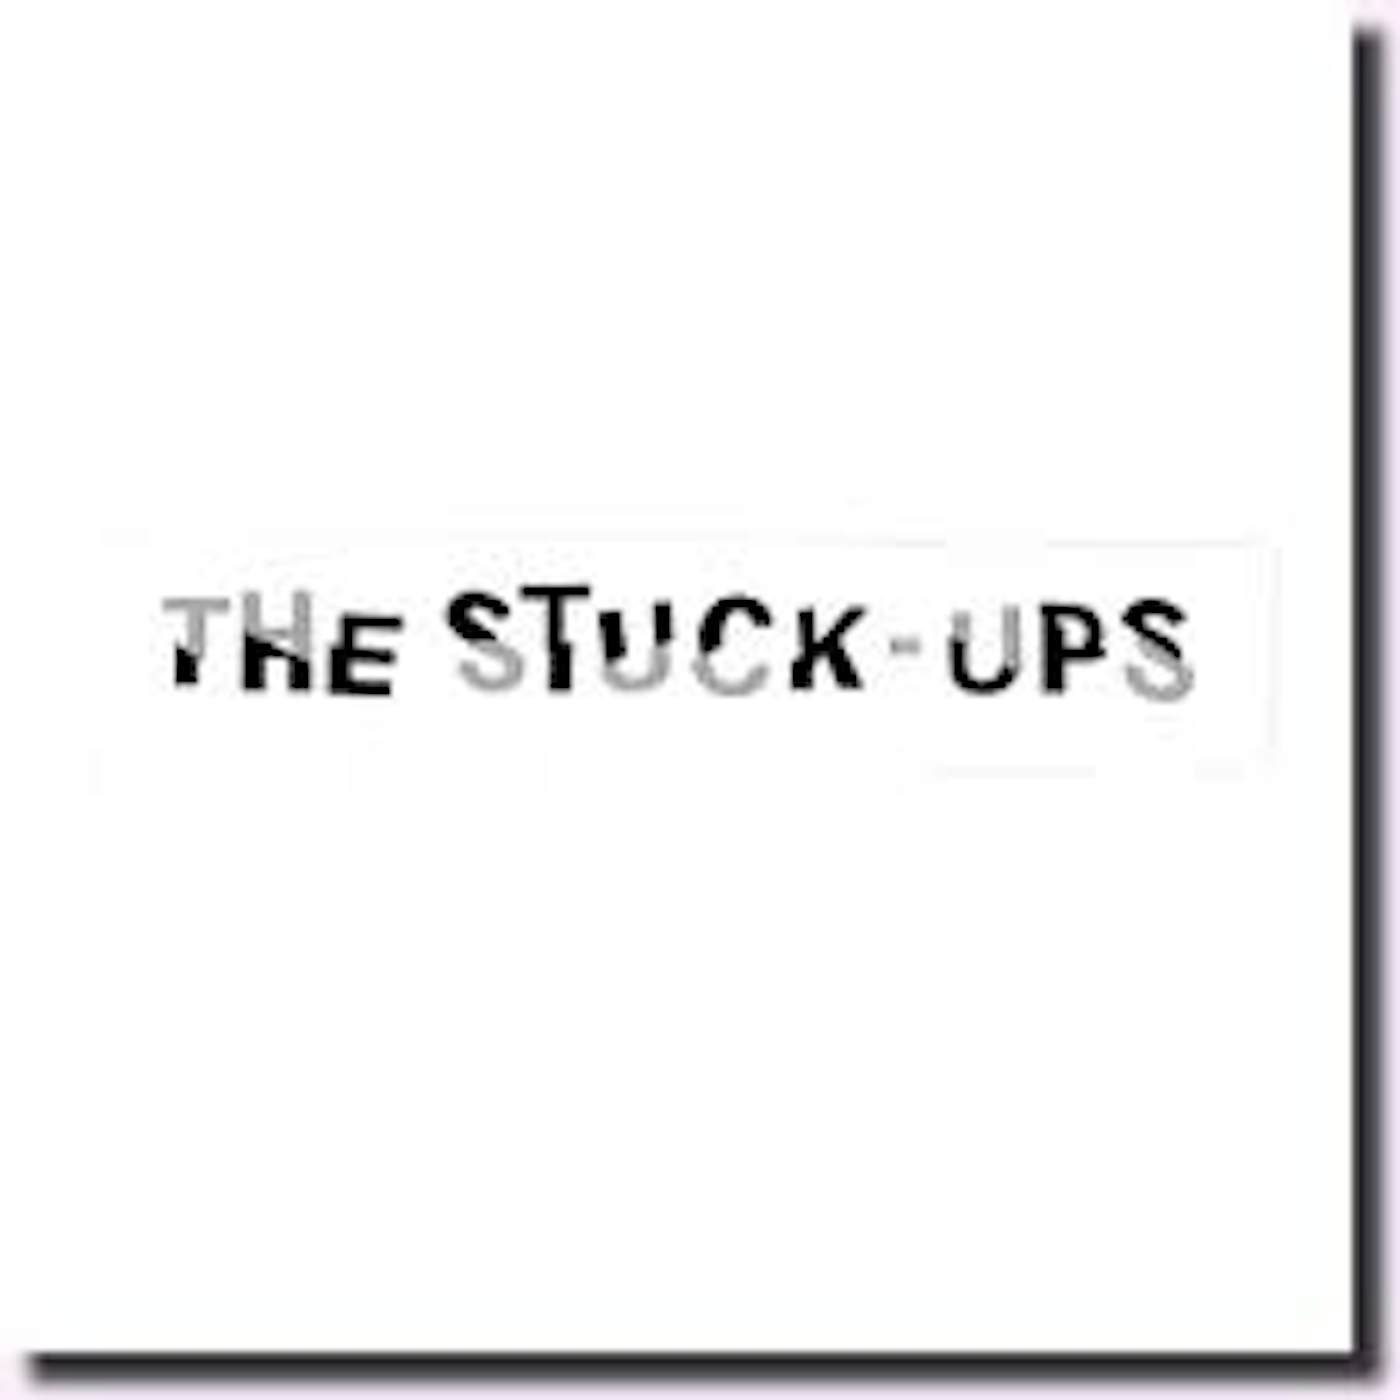 STUCK-UPS Vinyl Record